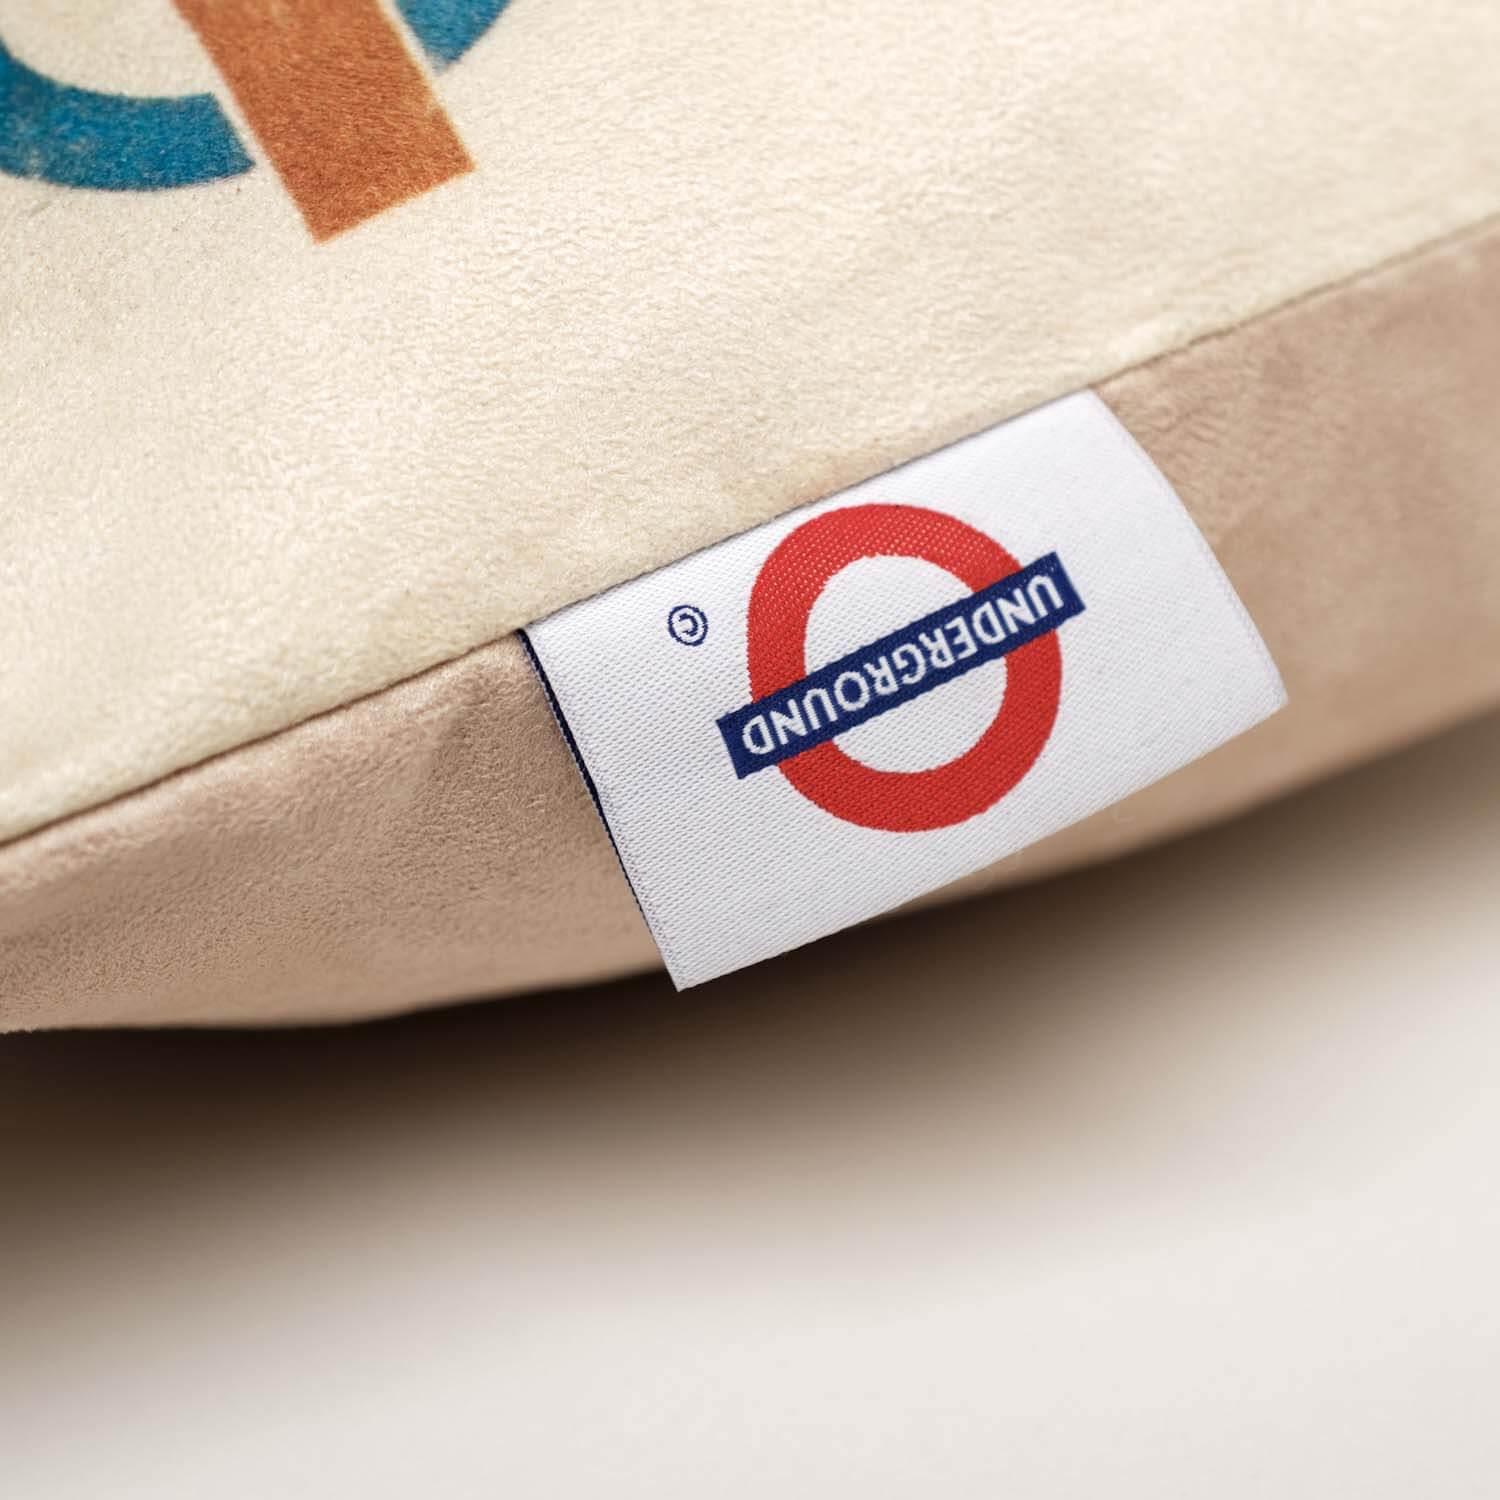 Science Museum - London Transport Cushion - Handmade Cushions UK - WeLoveCushions